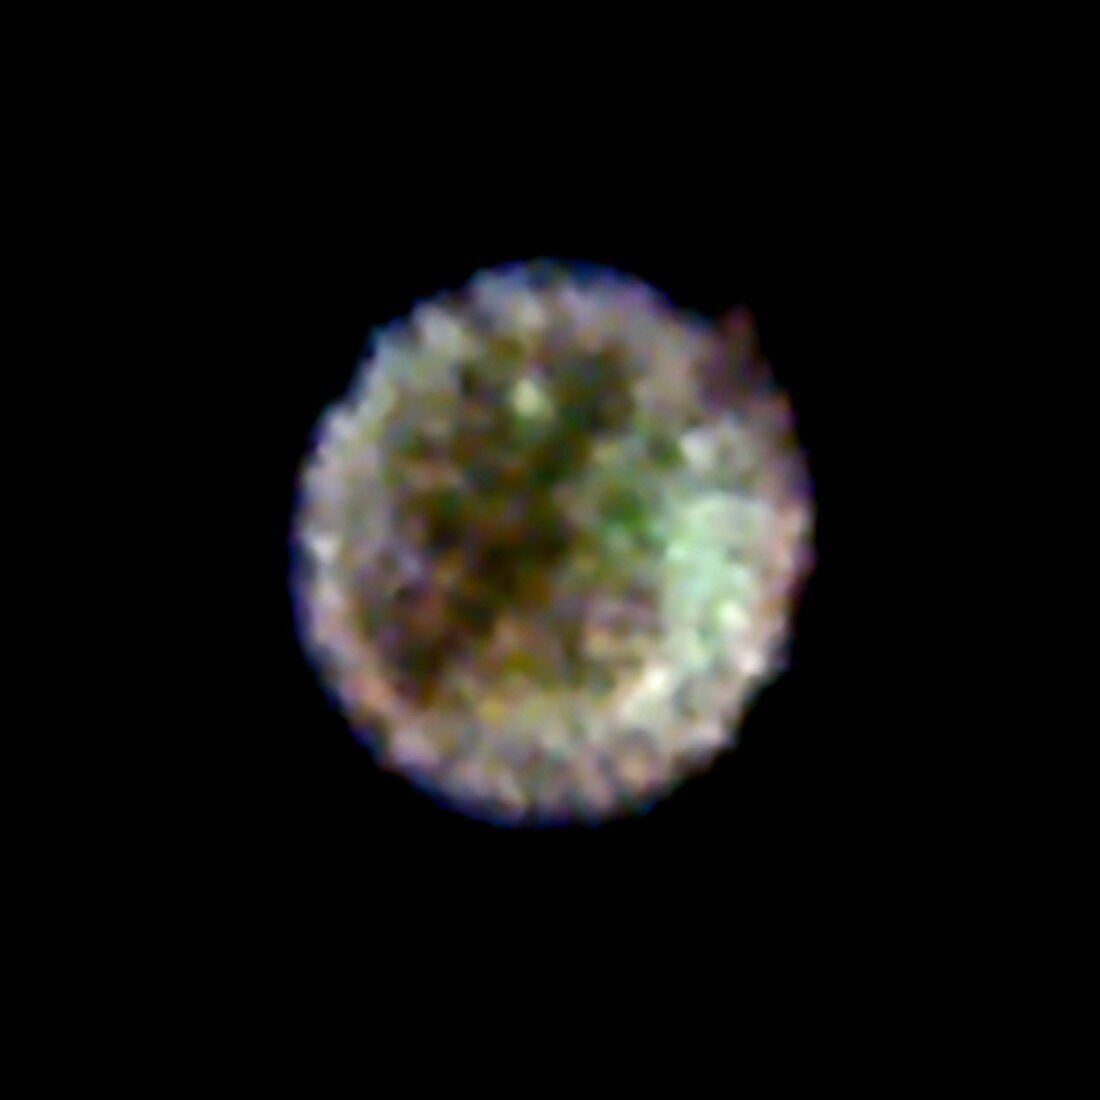 Supernova remnant,X-ray image